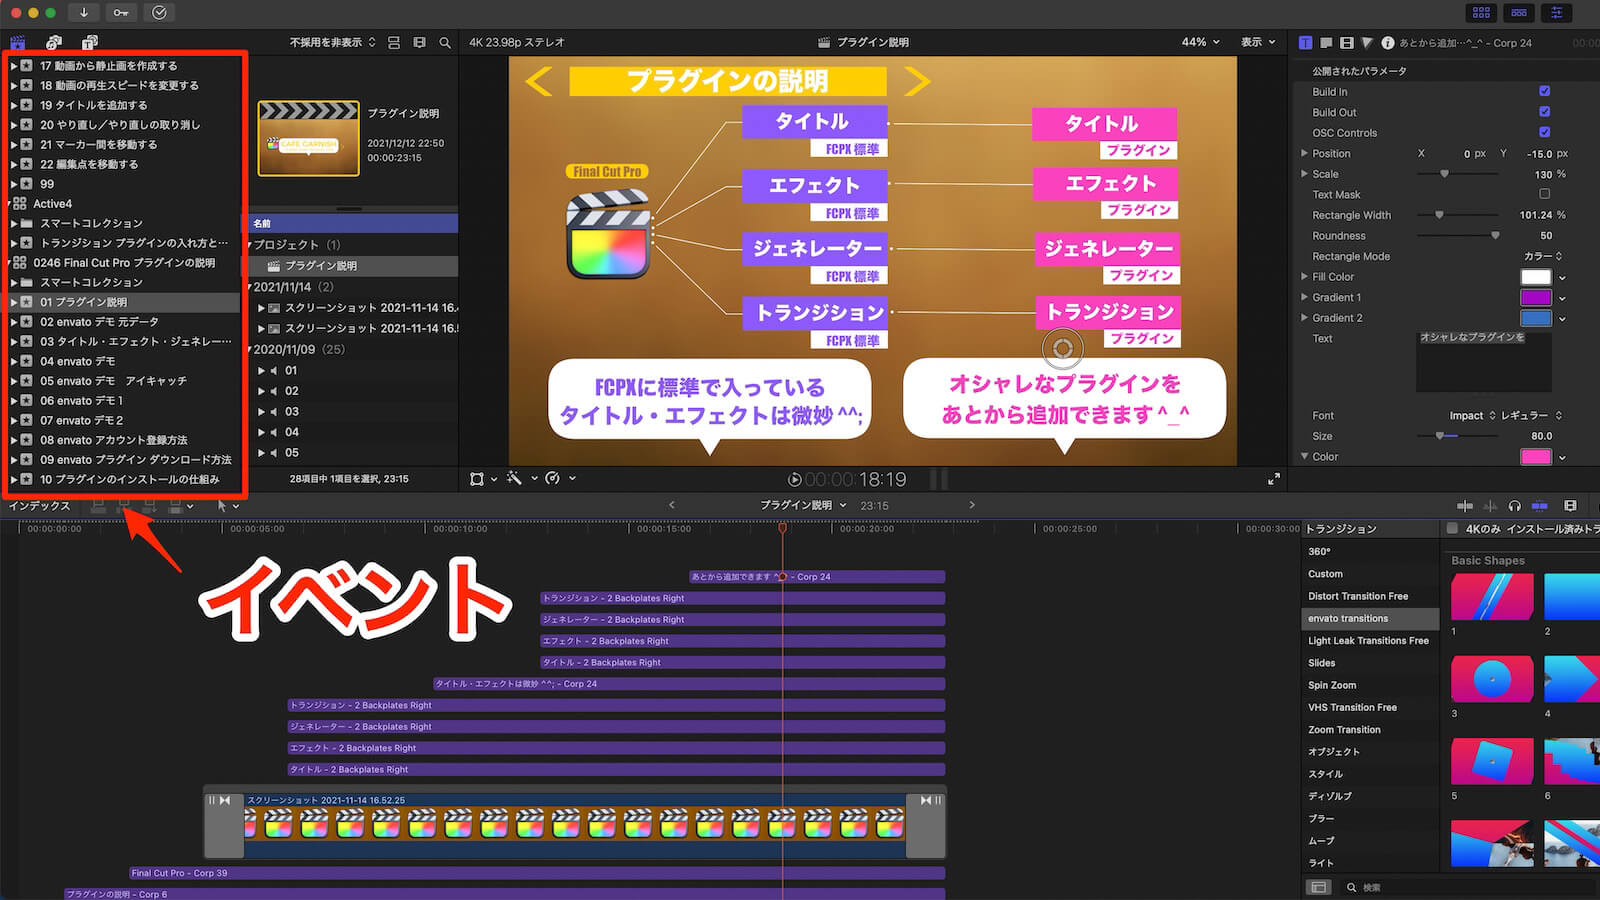 Screen displaying Final Cut Pro X events